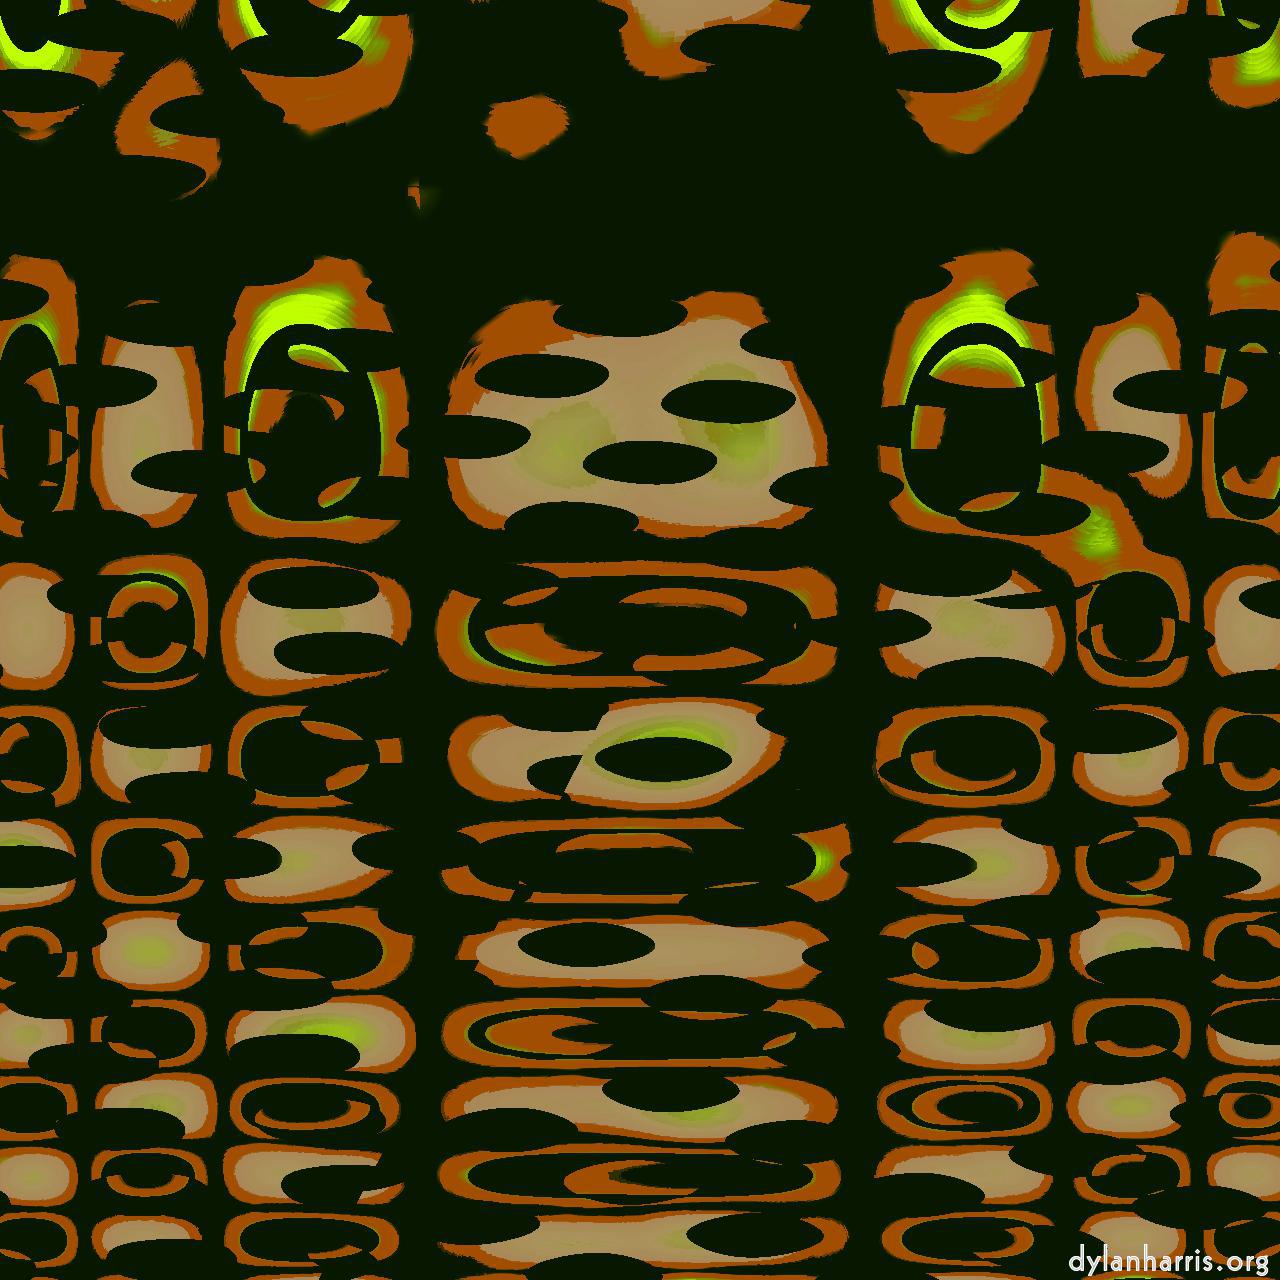 image: pattern :: vert grid